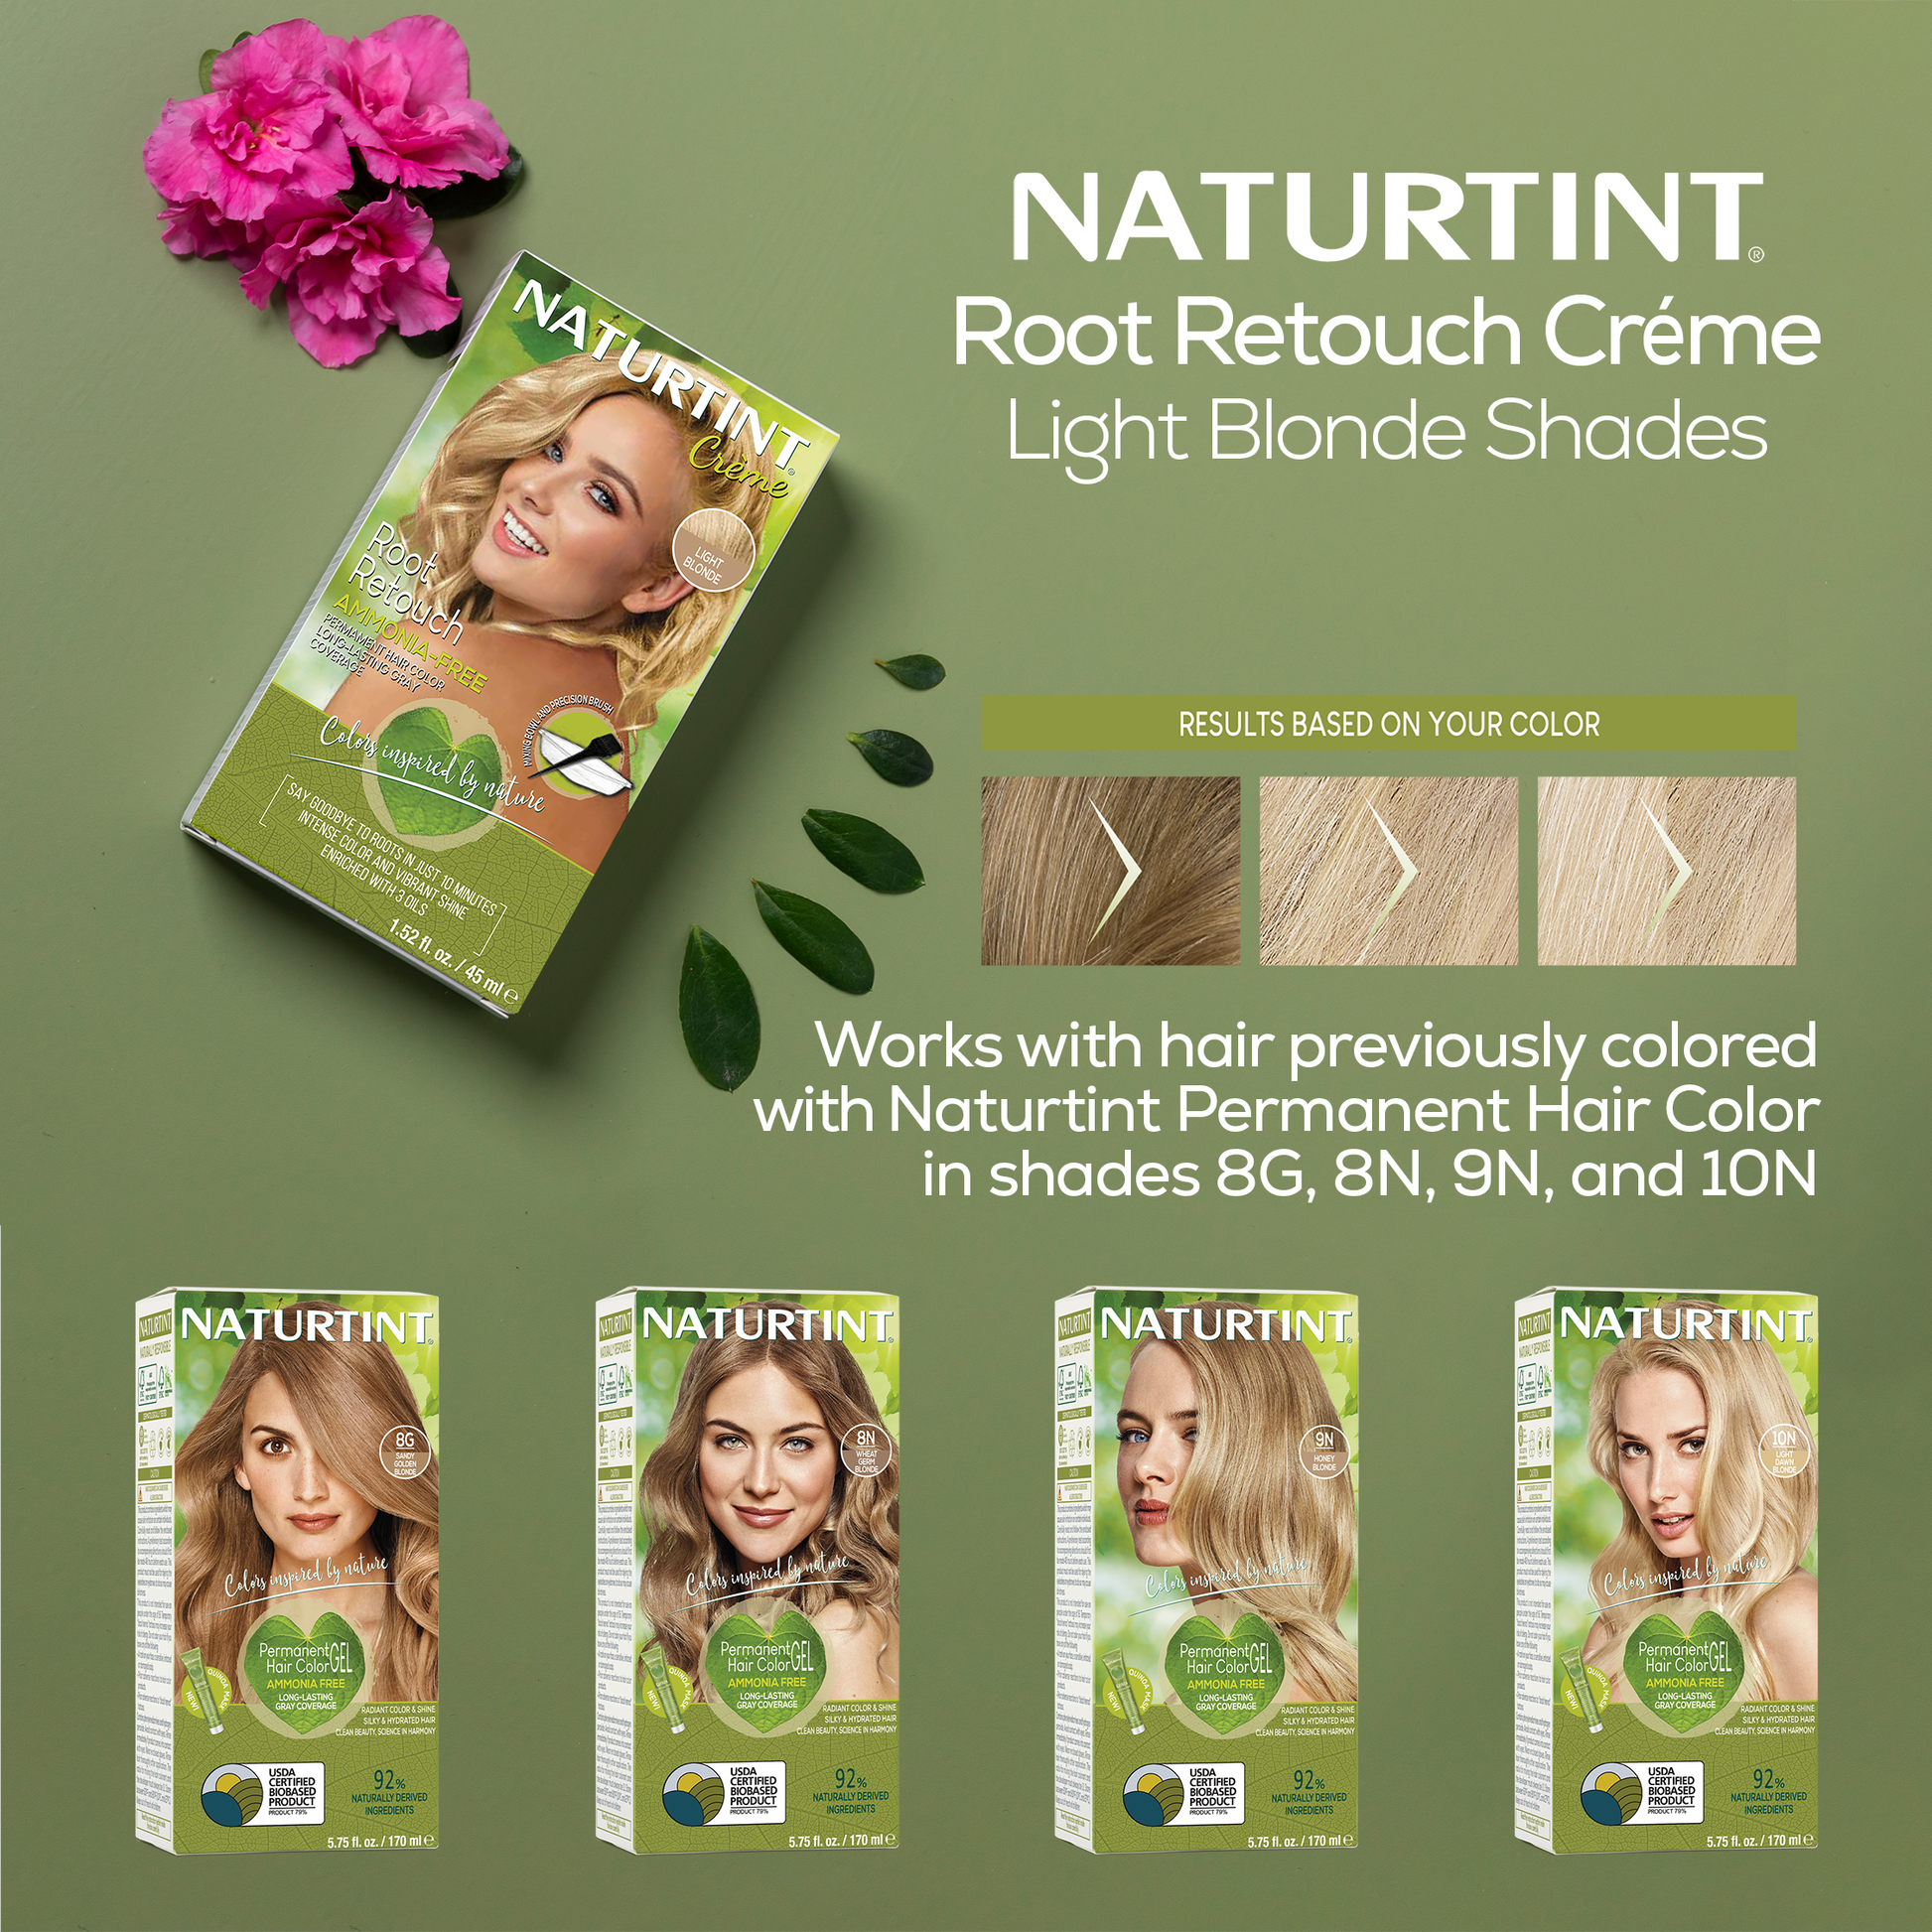 Naturtint Root Retouch Crème - Light blonde